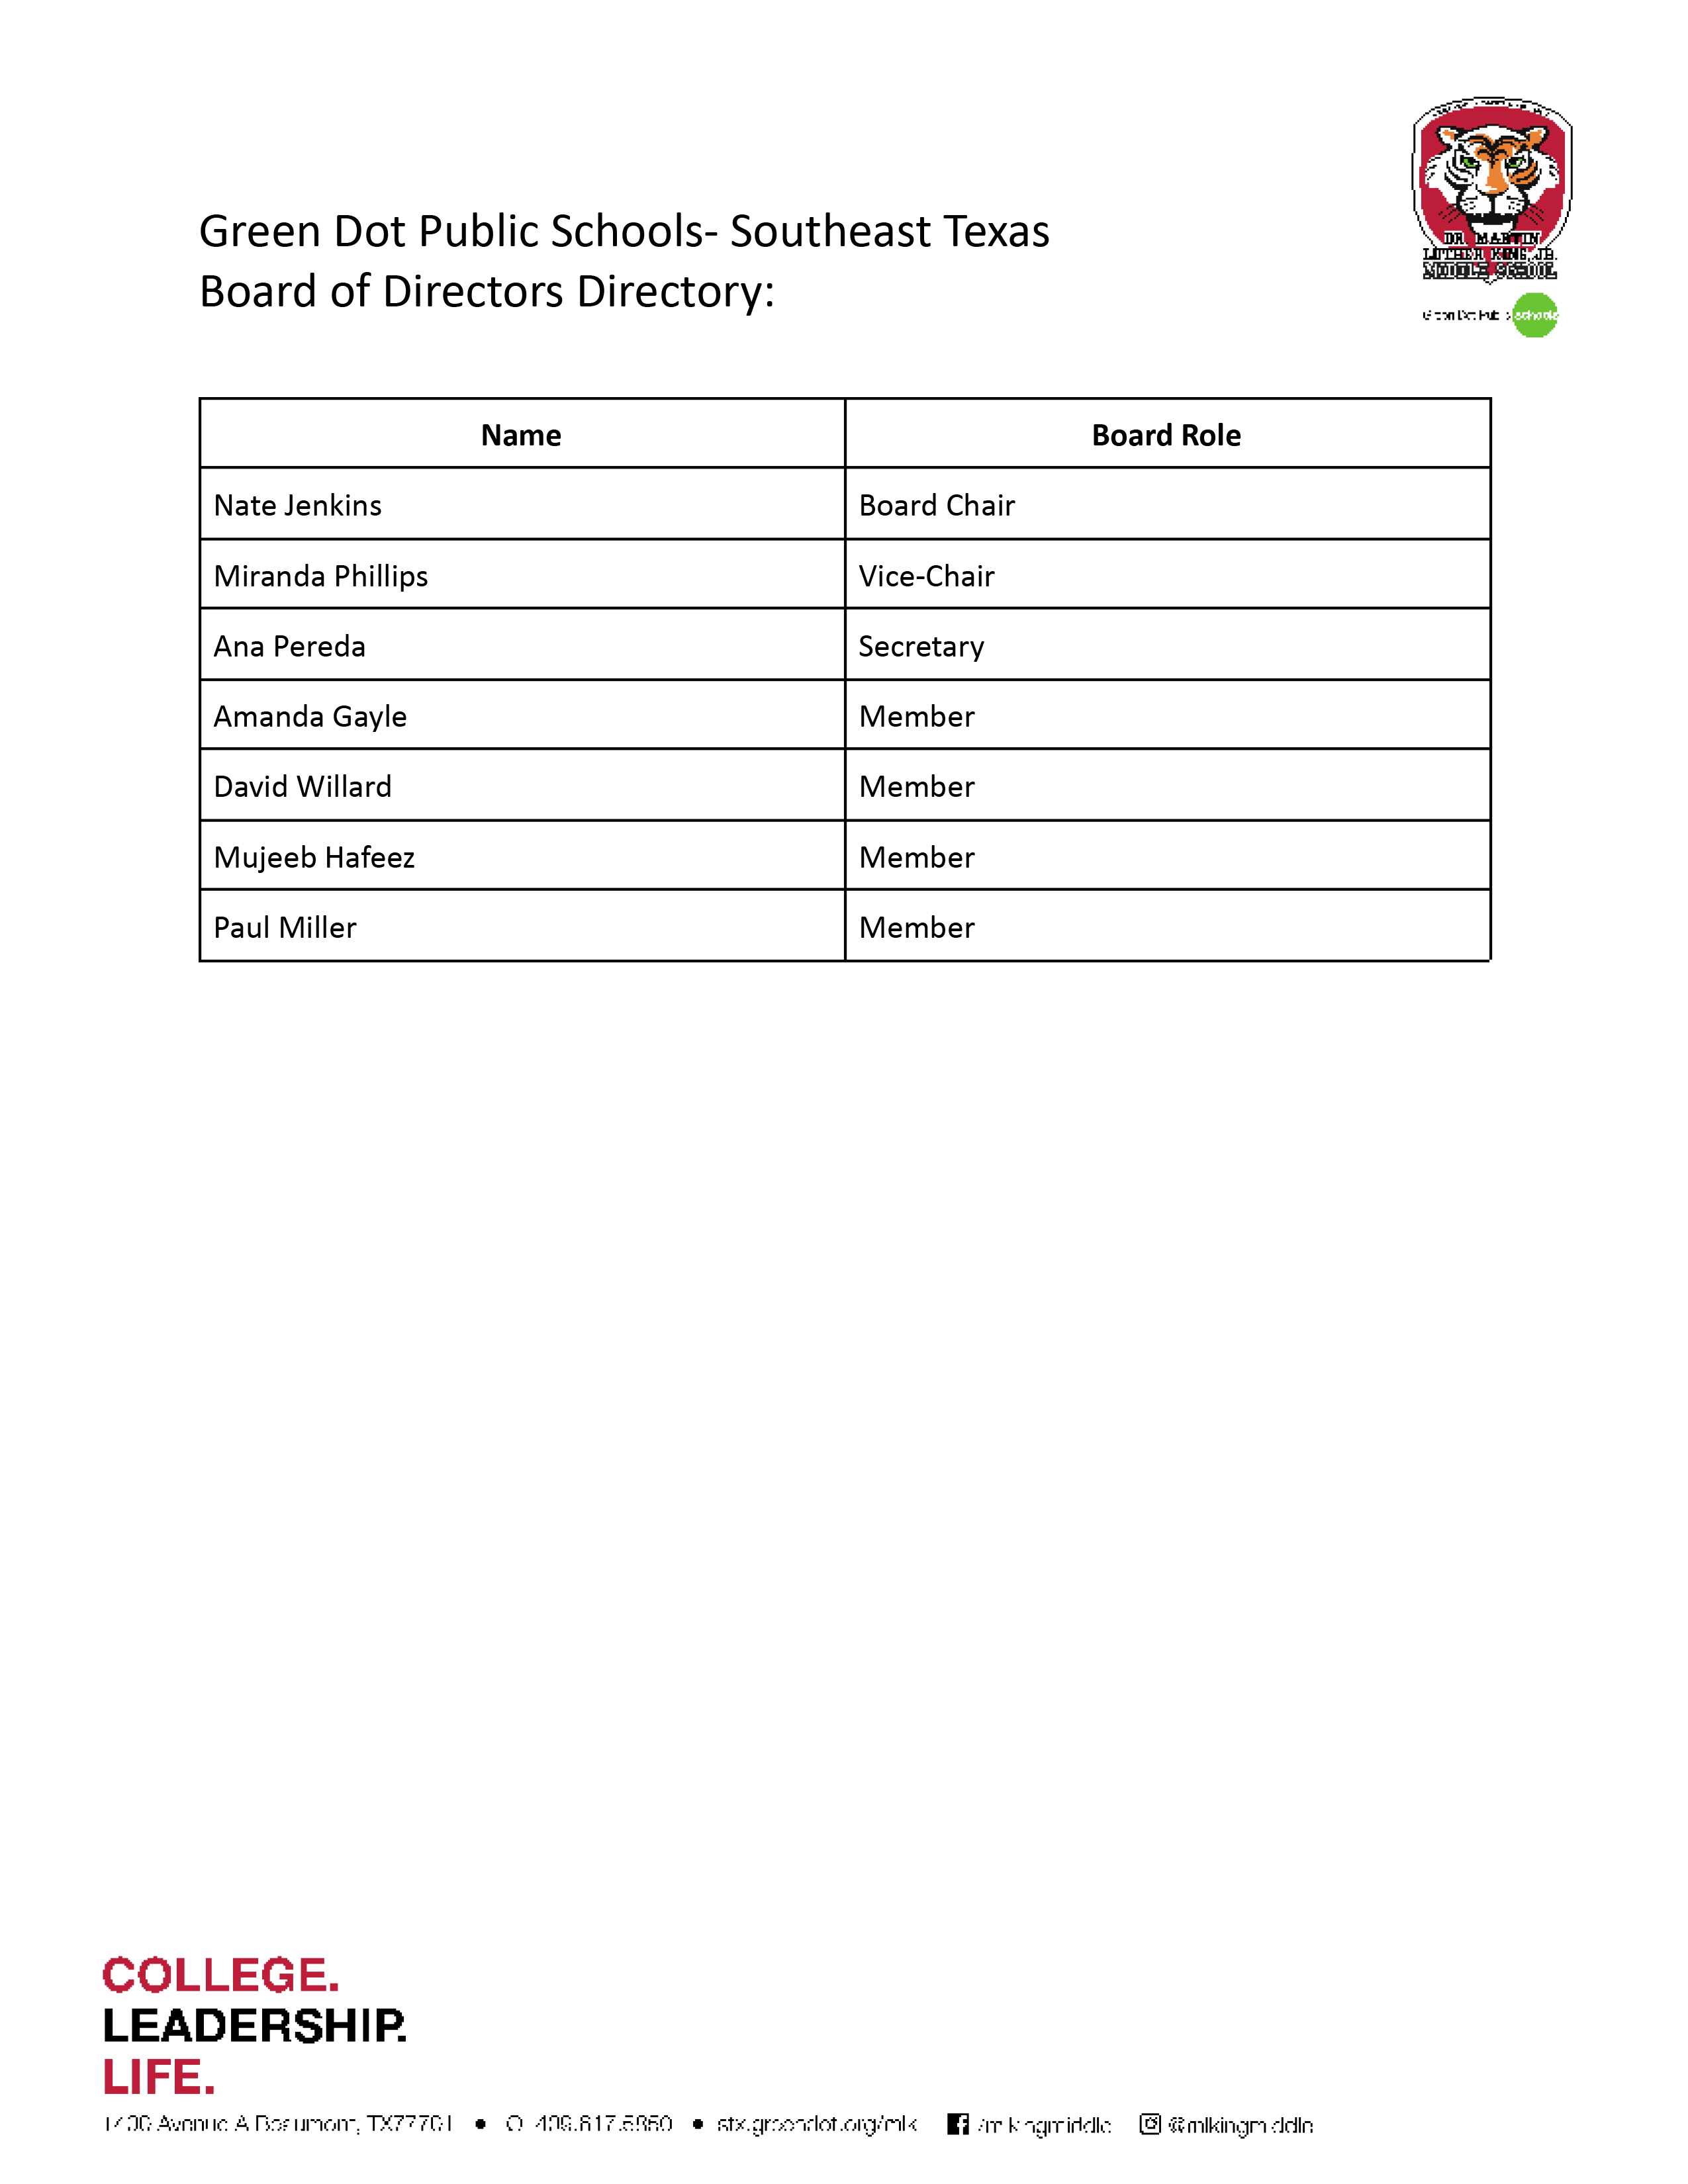 GDPSX Board of Directors_